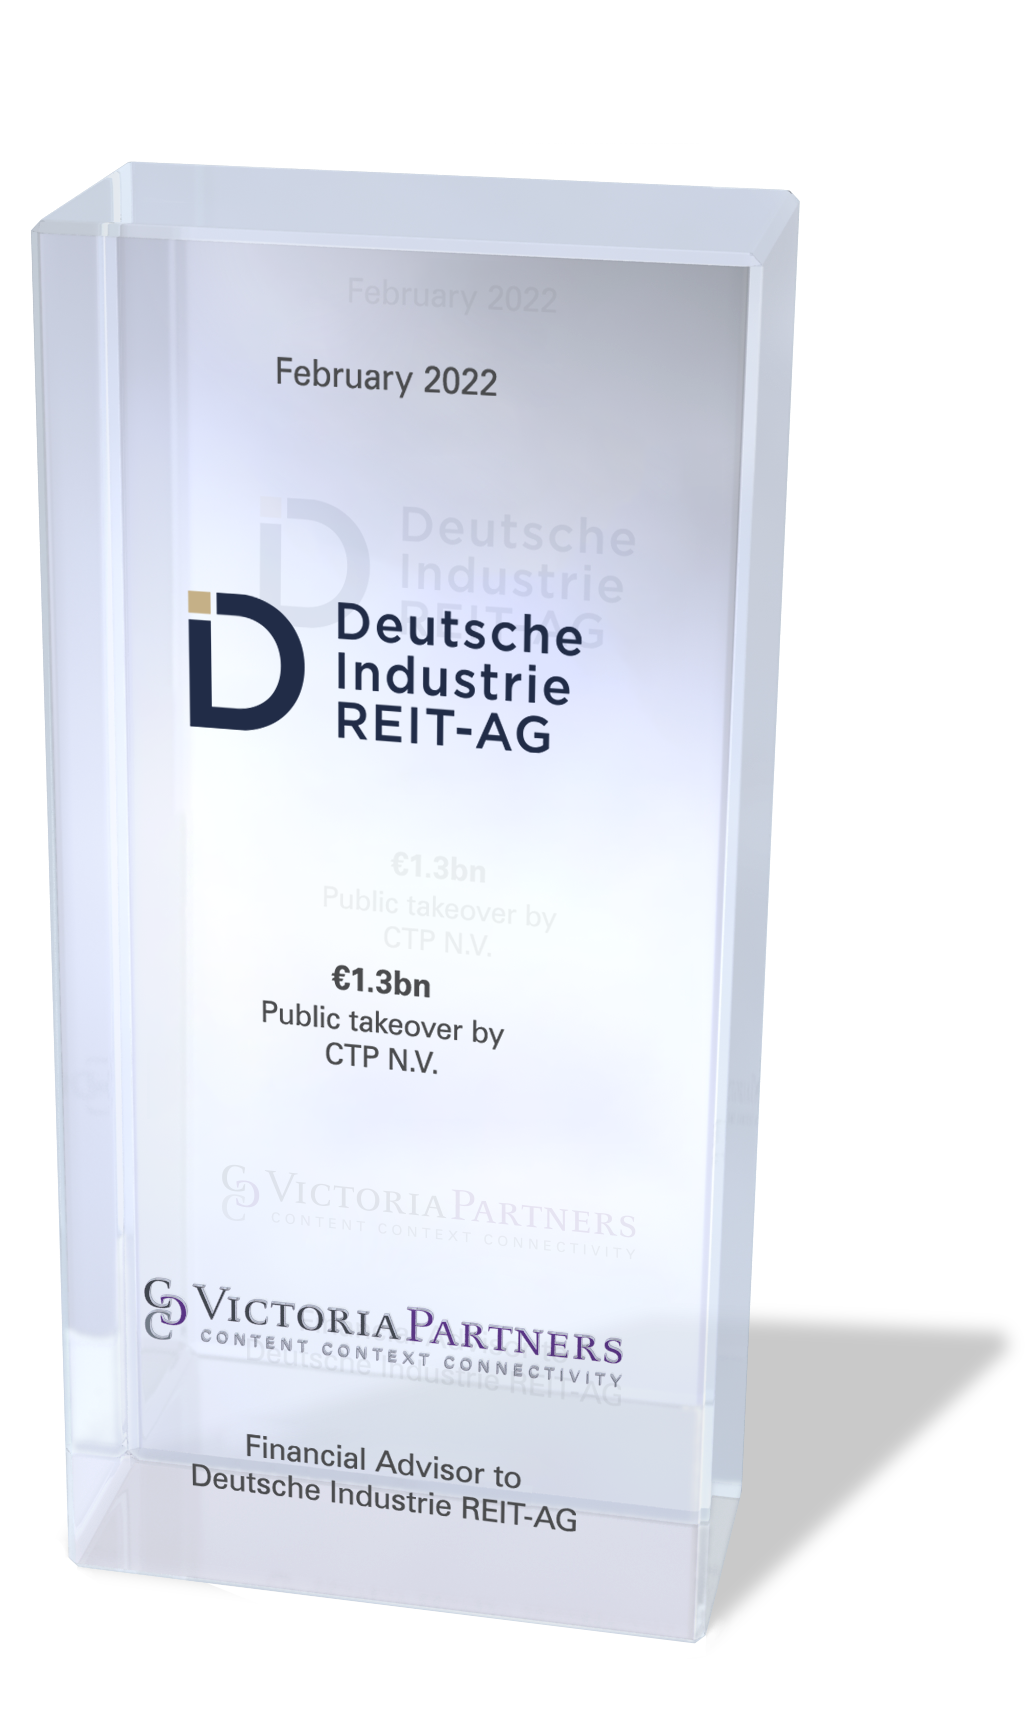 VICTORIAPARTNERS - Financial Advisor to Deutsche Industrie REIT-AG - February 2022